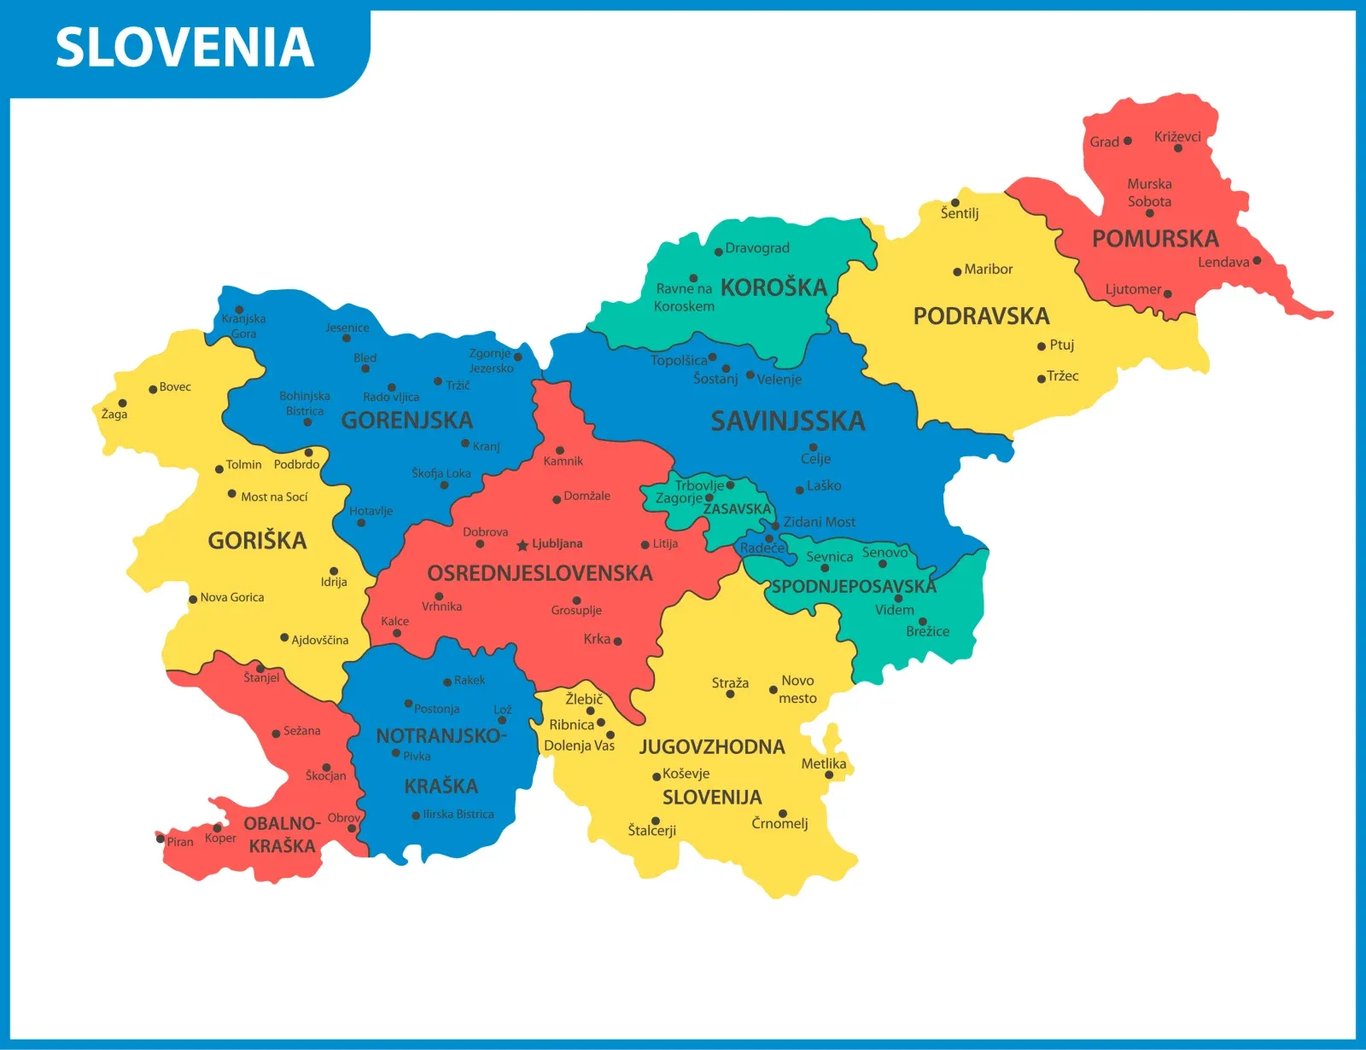 Gorenjska Region, Slovenia 2022 - Cities and Attractions